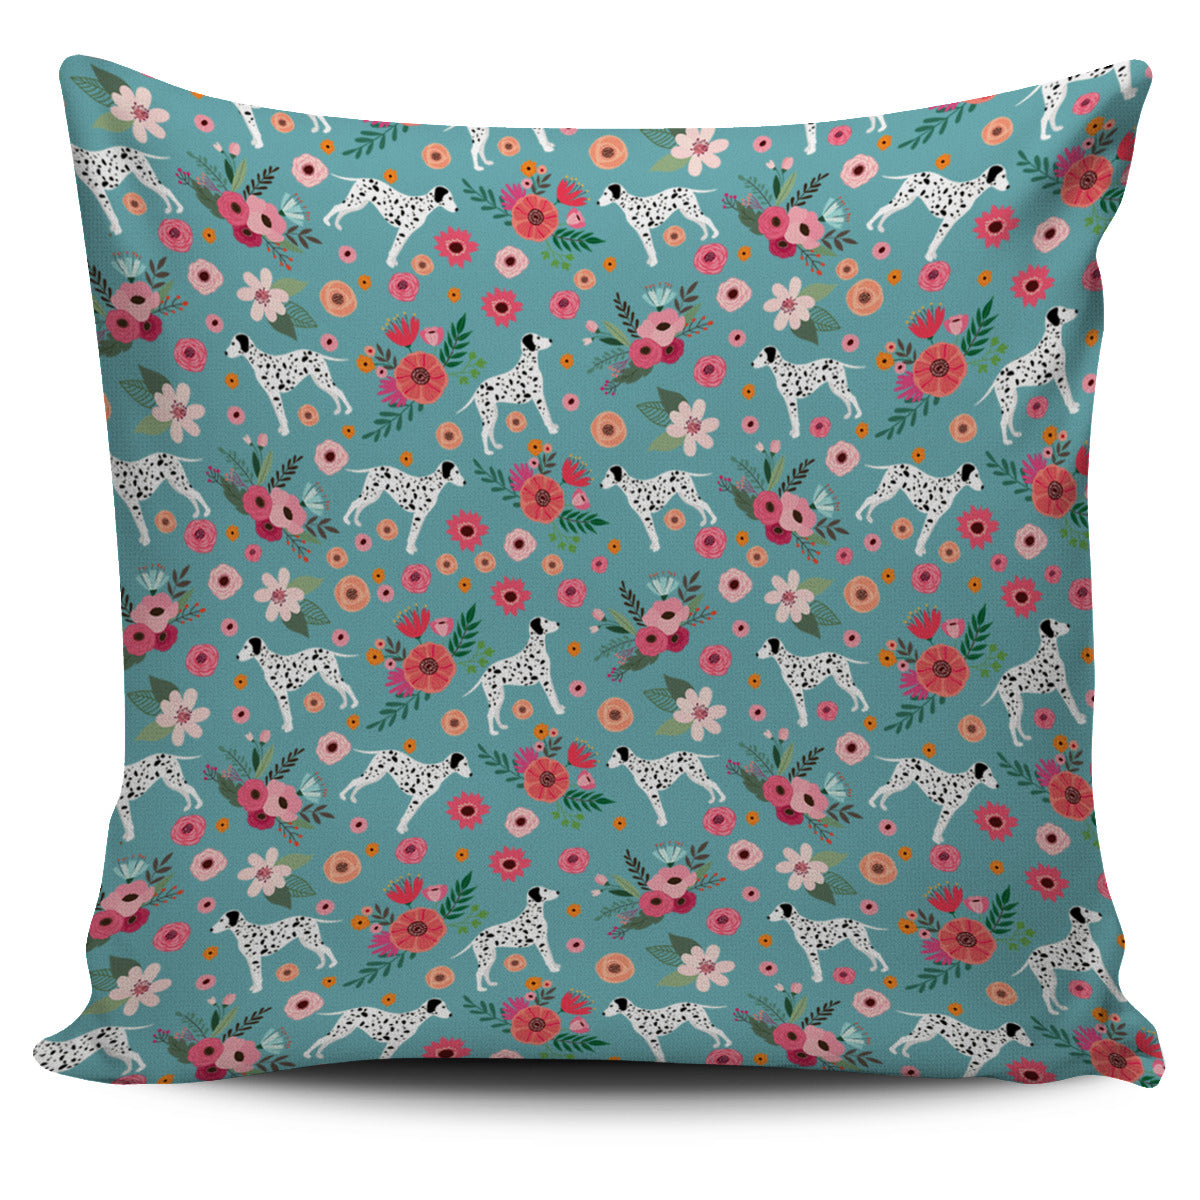 Dalmatian Flower Pillow Cover